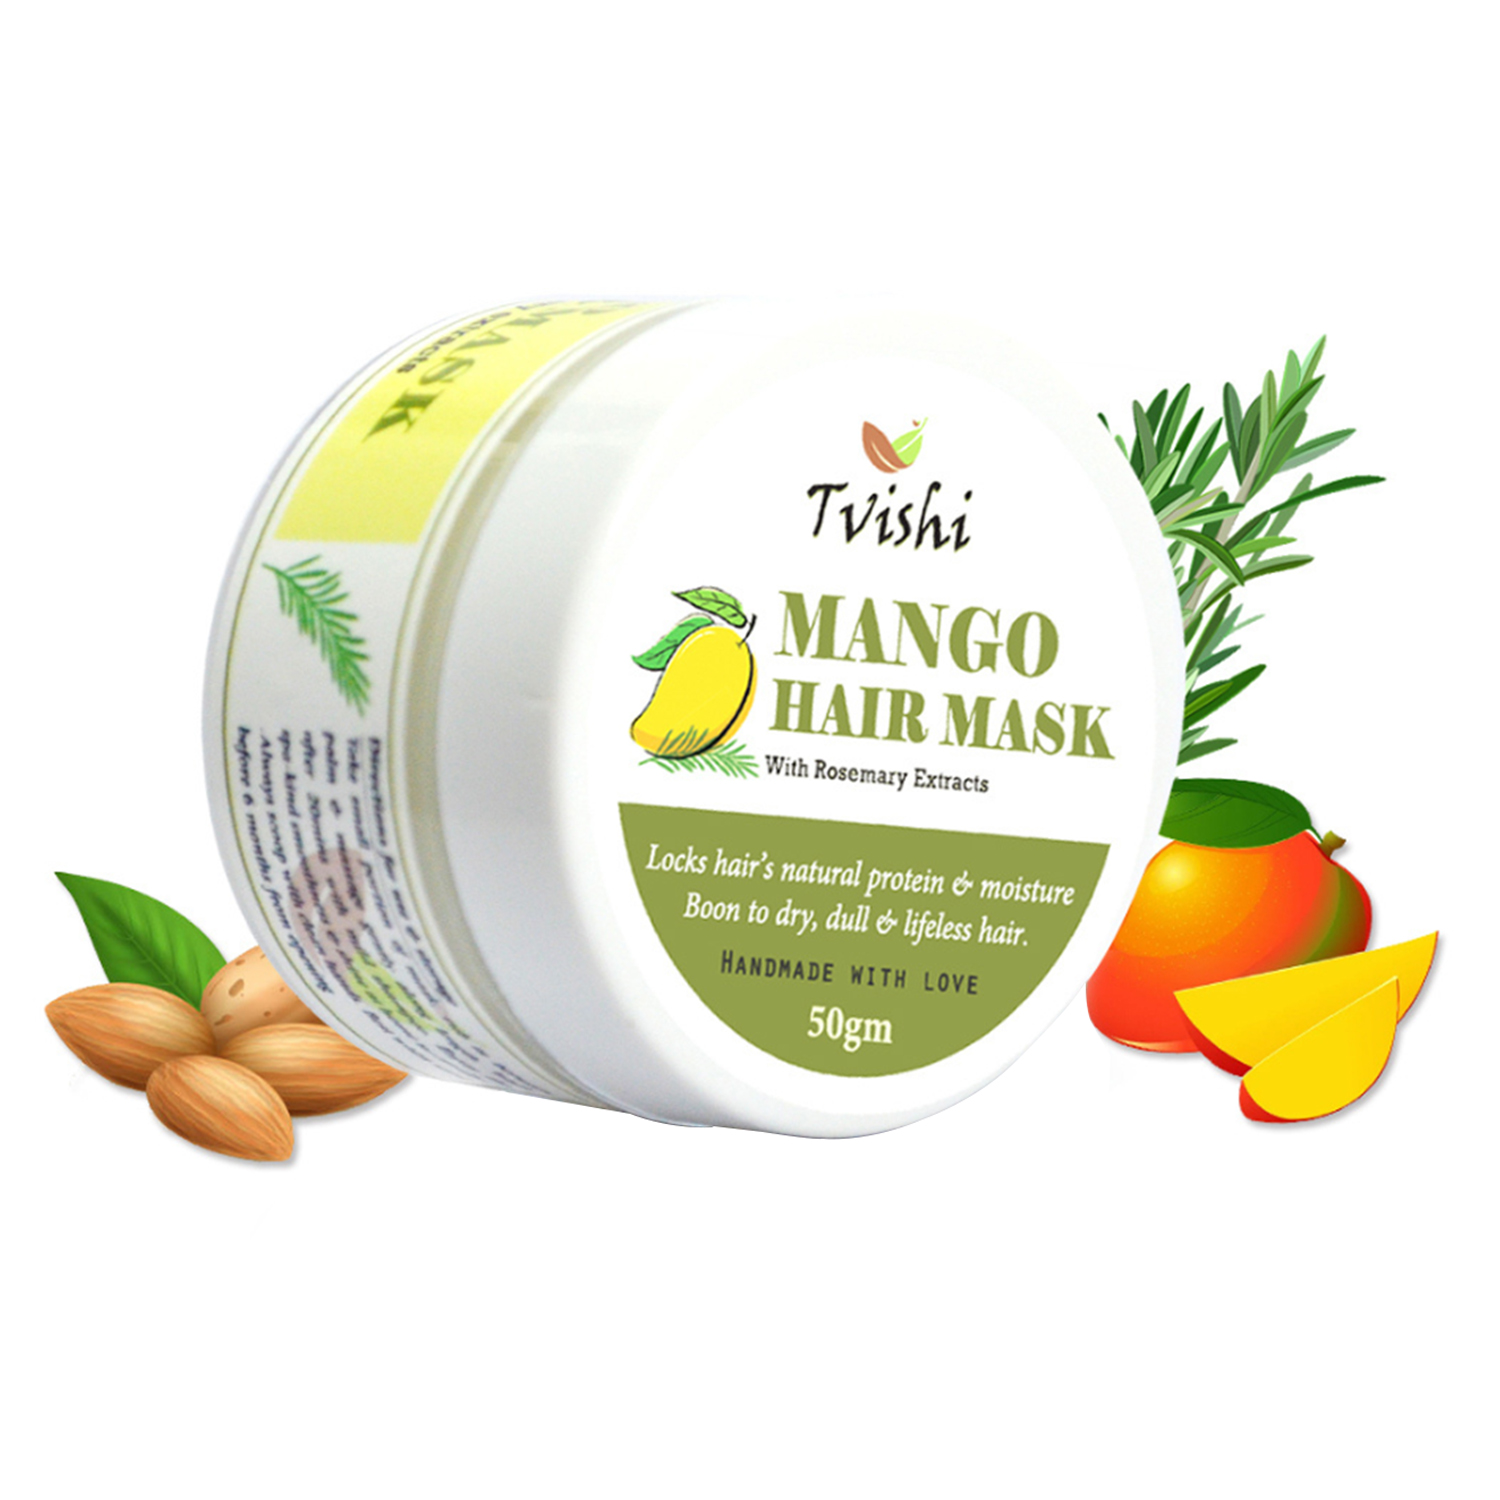 Tvishi Handmade Mango Hair Mask With Rosemary Extracts-50gm